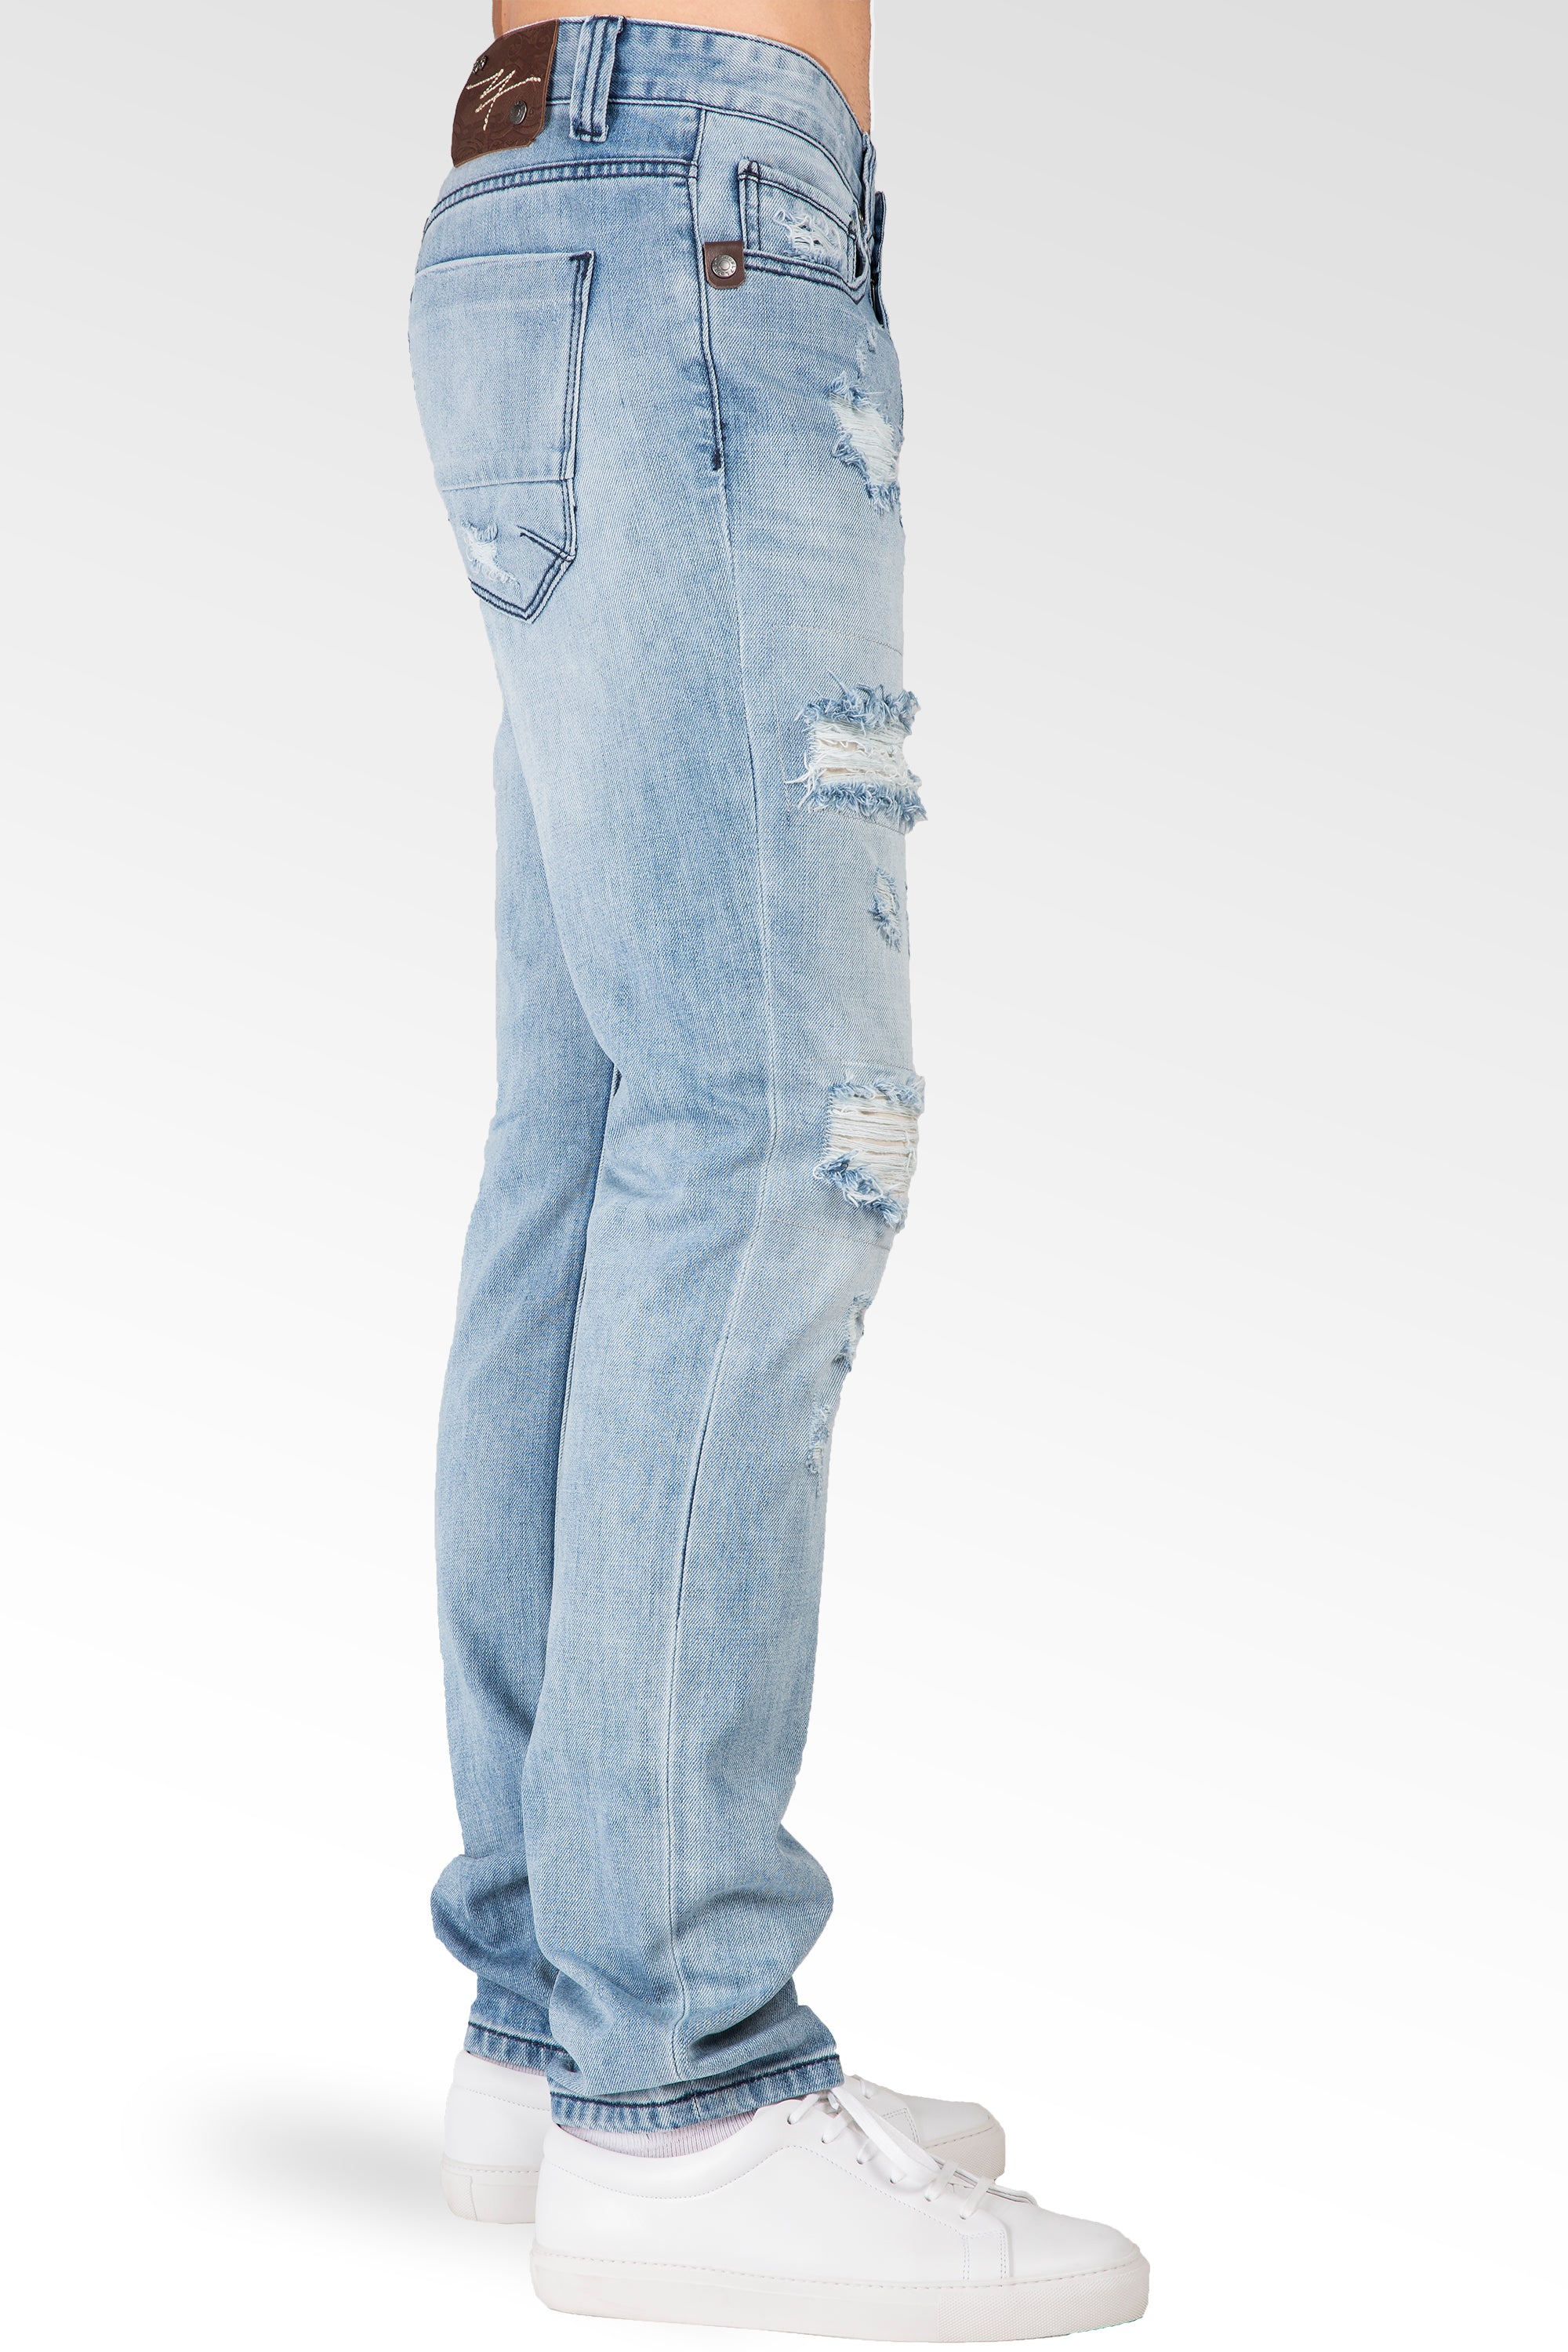 Level 7 Men's Powder Blue Distressed Slim Tapered 5 pocket Jeans Premium  Denim – Level 7 Jeans